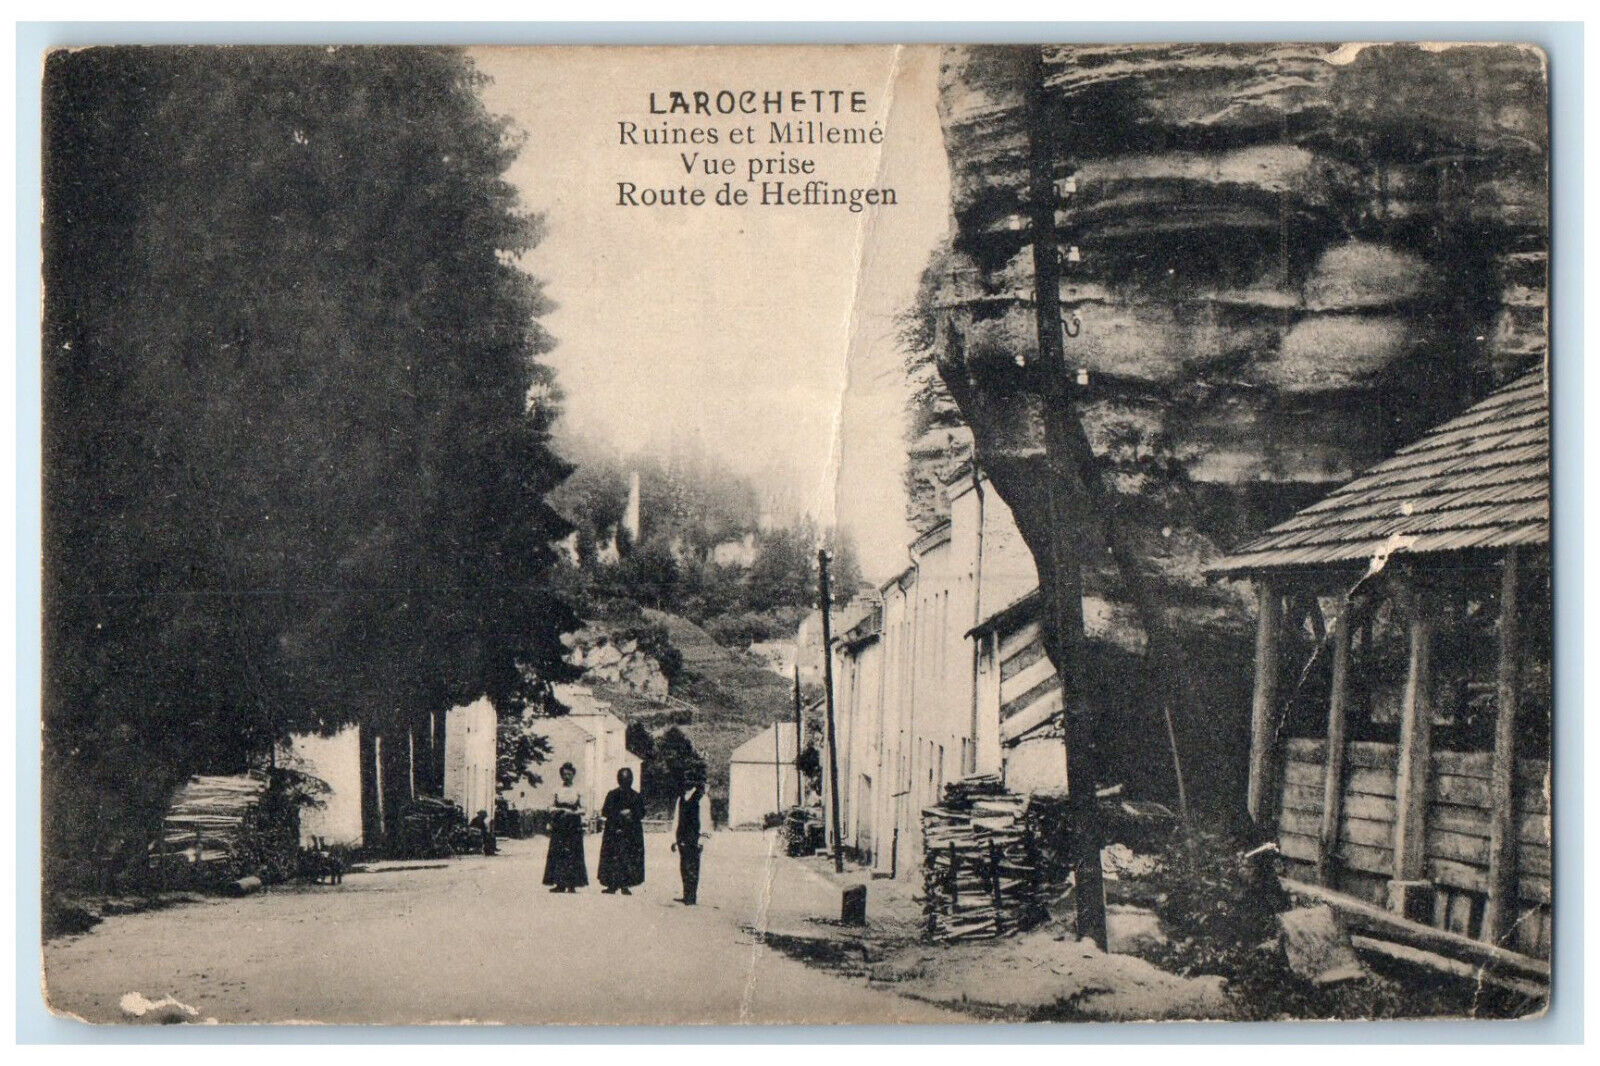 c1910 Ruins Milleme View From Heffingen Road Larochette Luxembourg Postcard